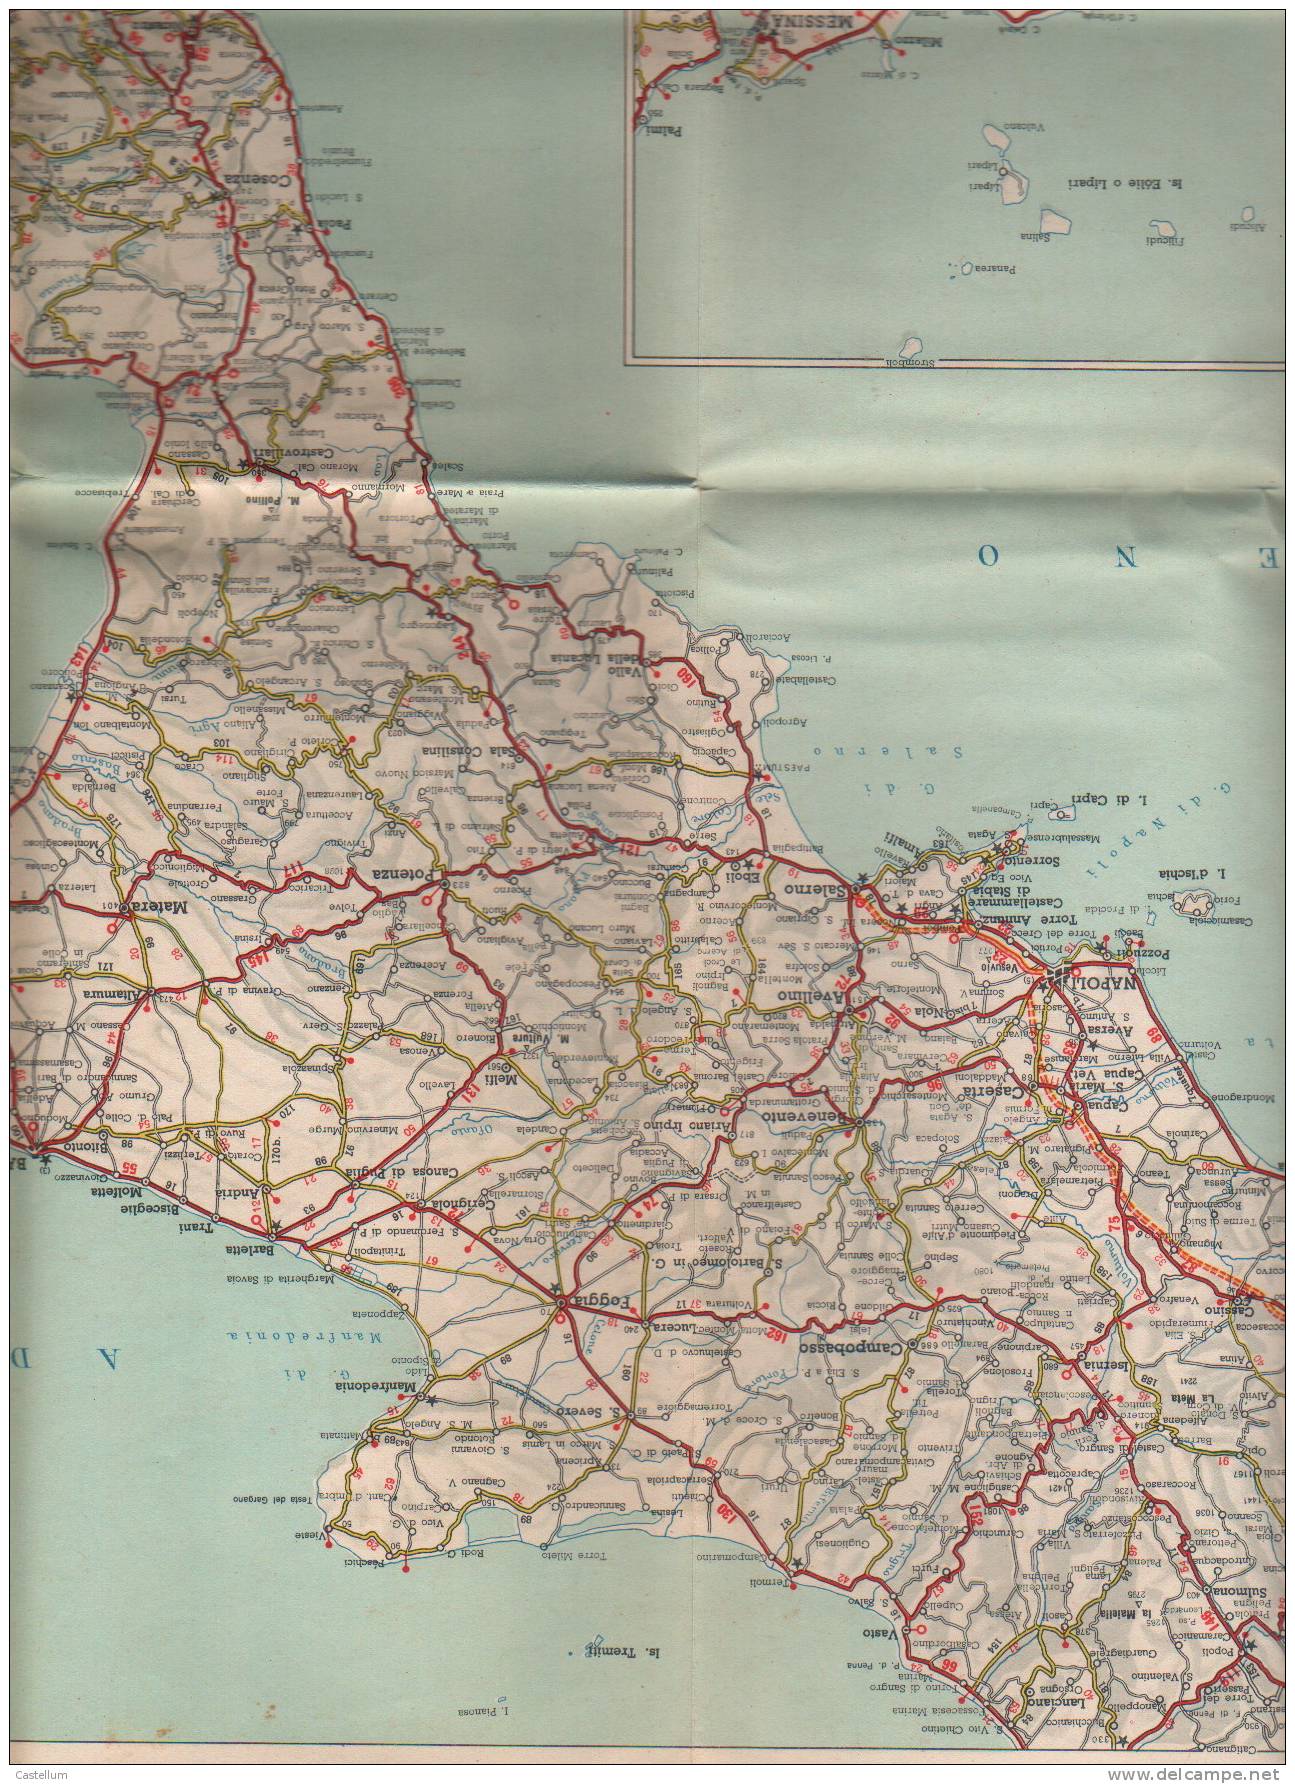 CARTE ROUTIERE ITALIA-1958 - Strassenkarten